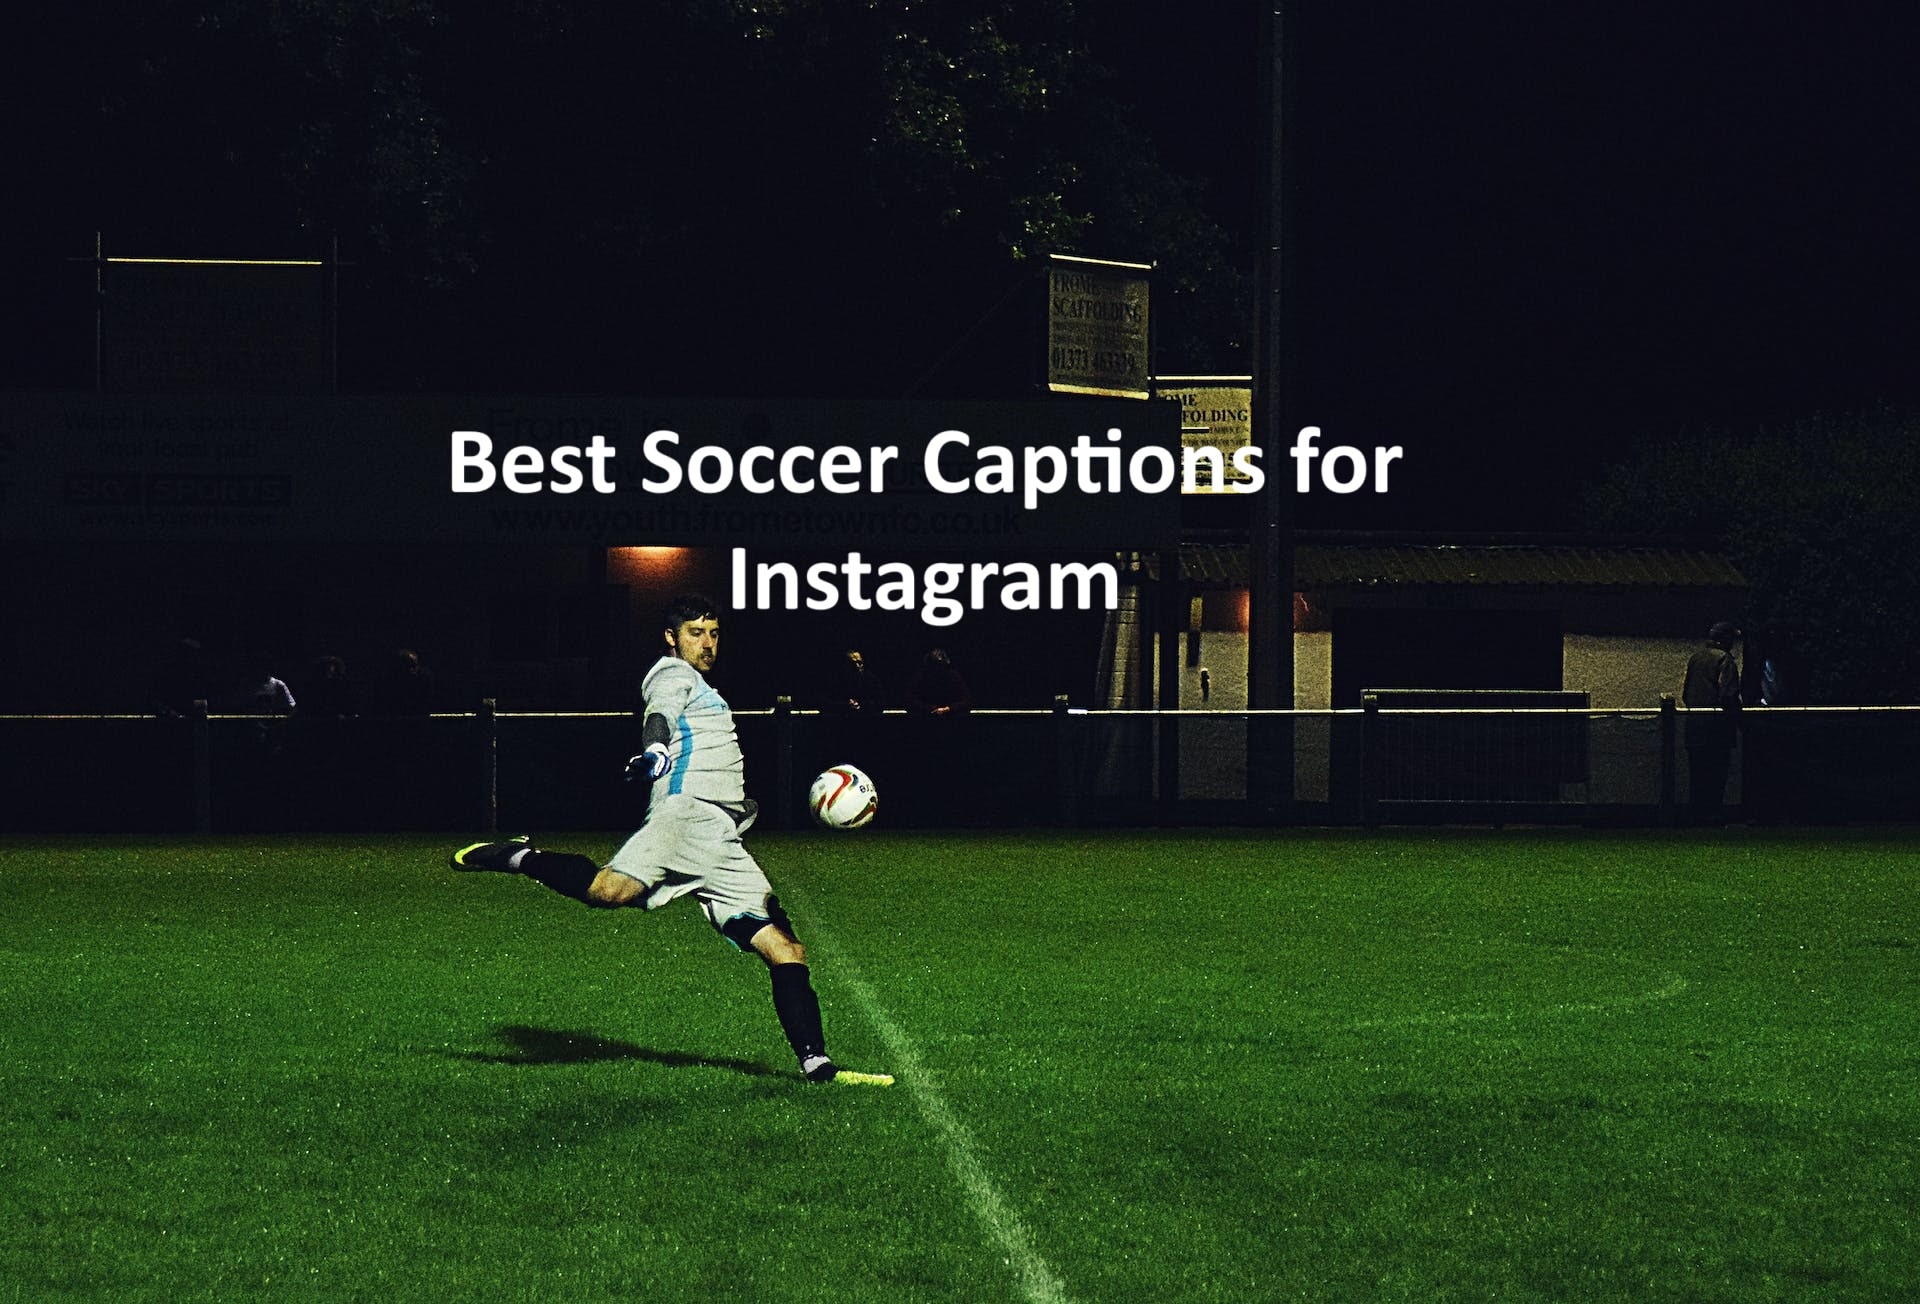 125+ Best Soccer Captions for Instagram Photos - Scoring Big